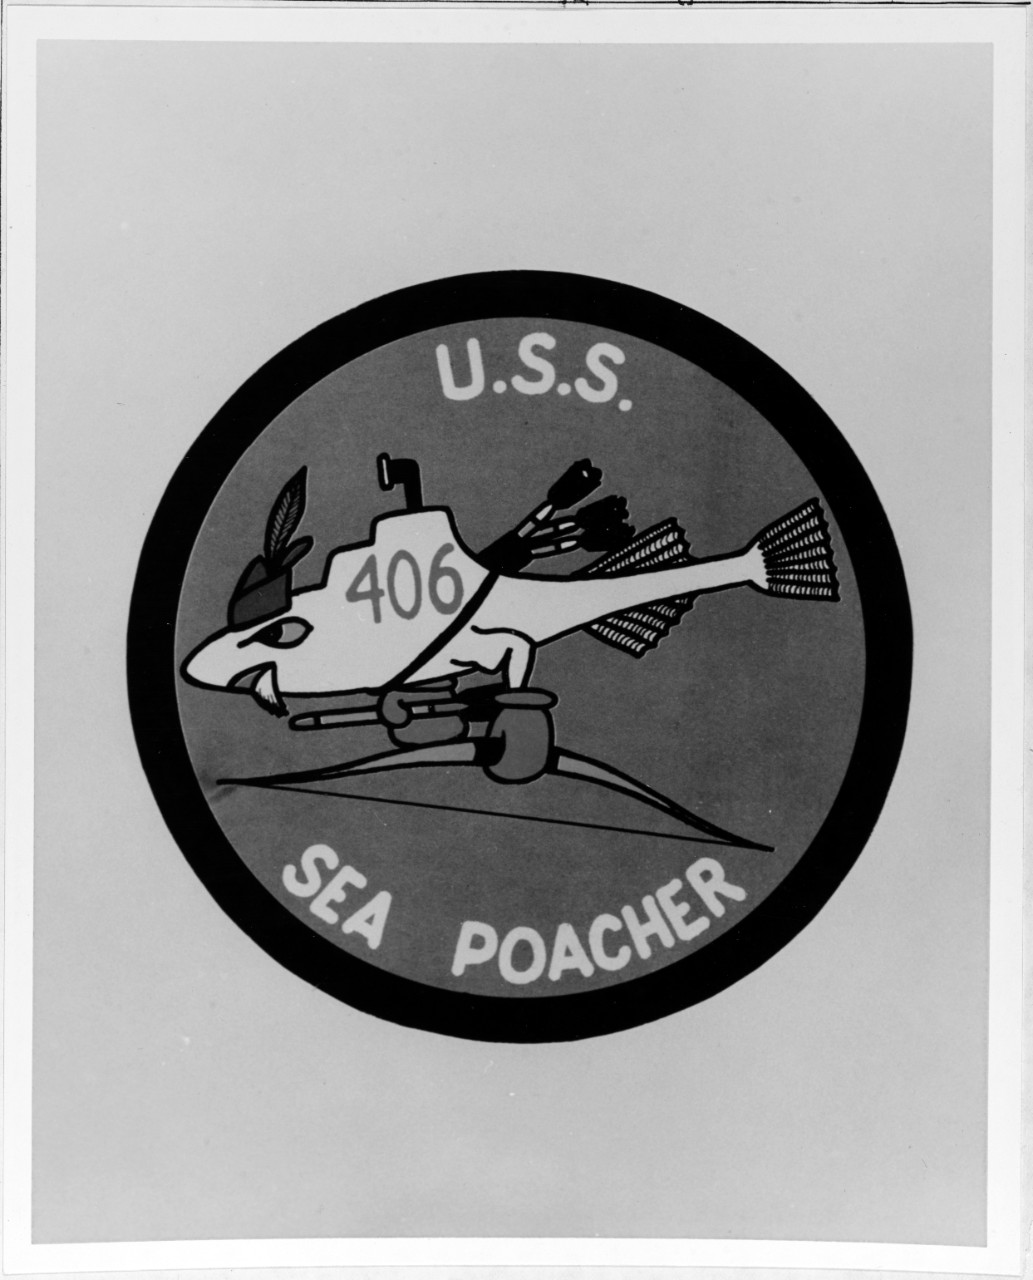 Insignia:  USS SEA POACHER (SS-406)